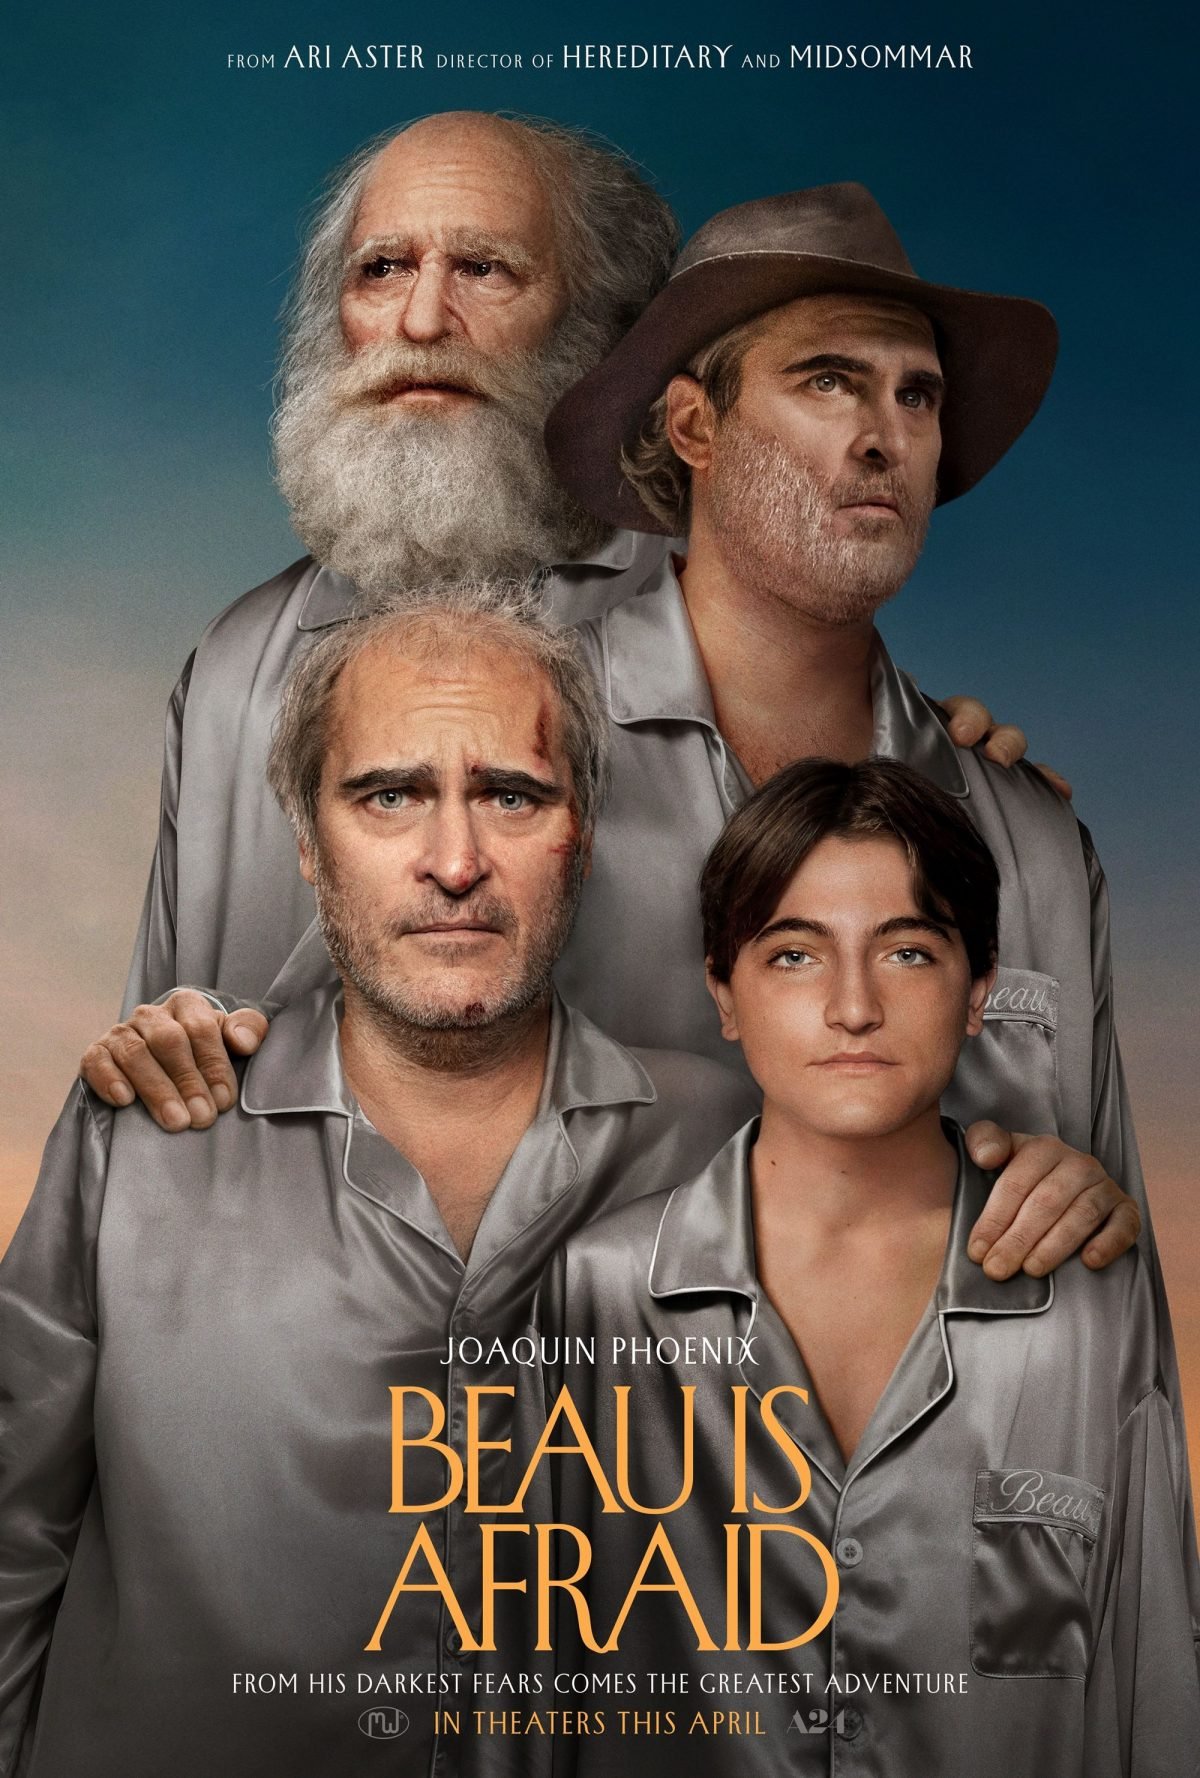 Four generations of Joaquin Phoenix look upset in Ari Aster's Beau Is Afraid.